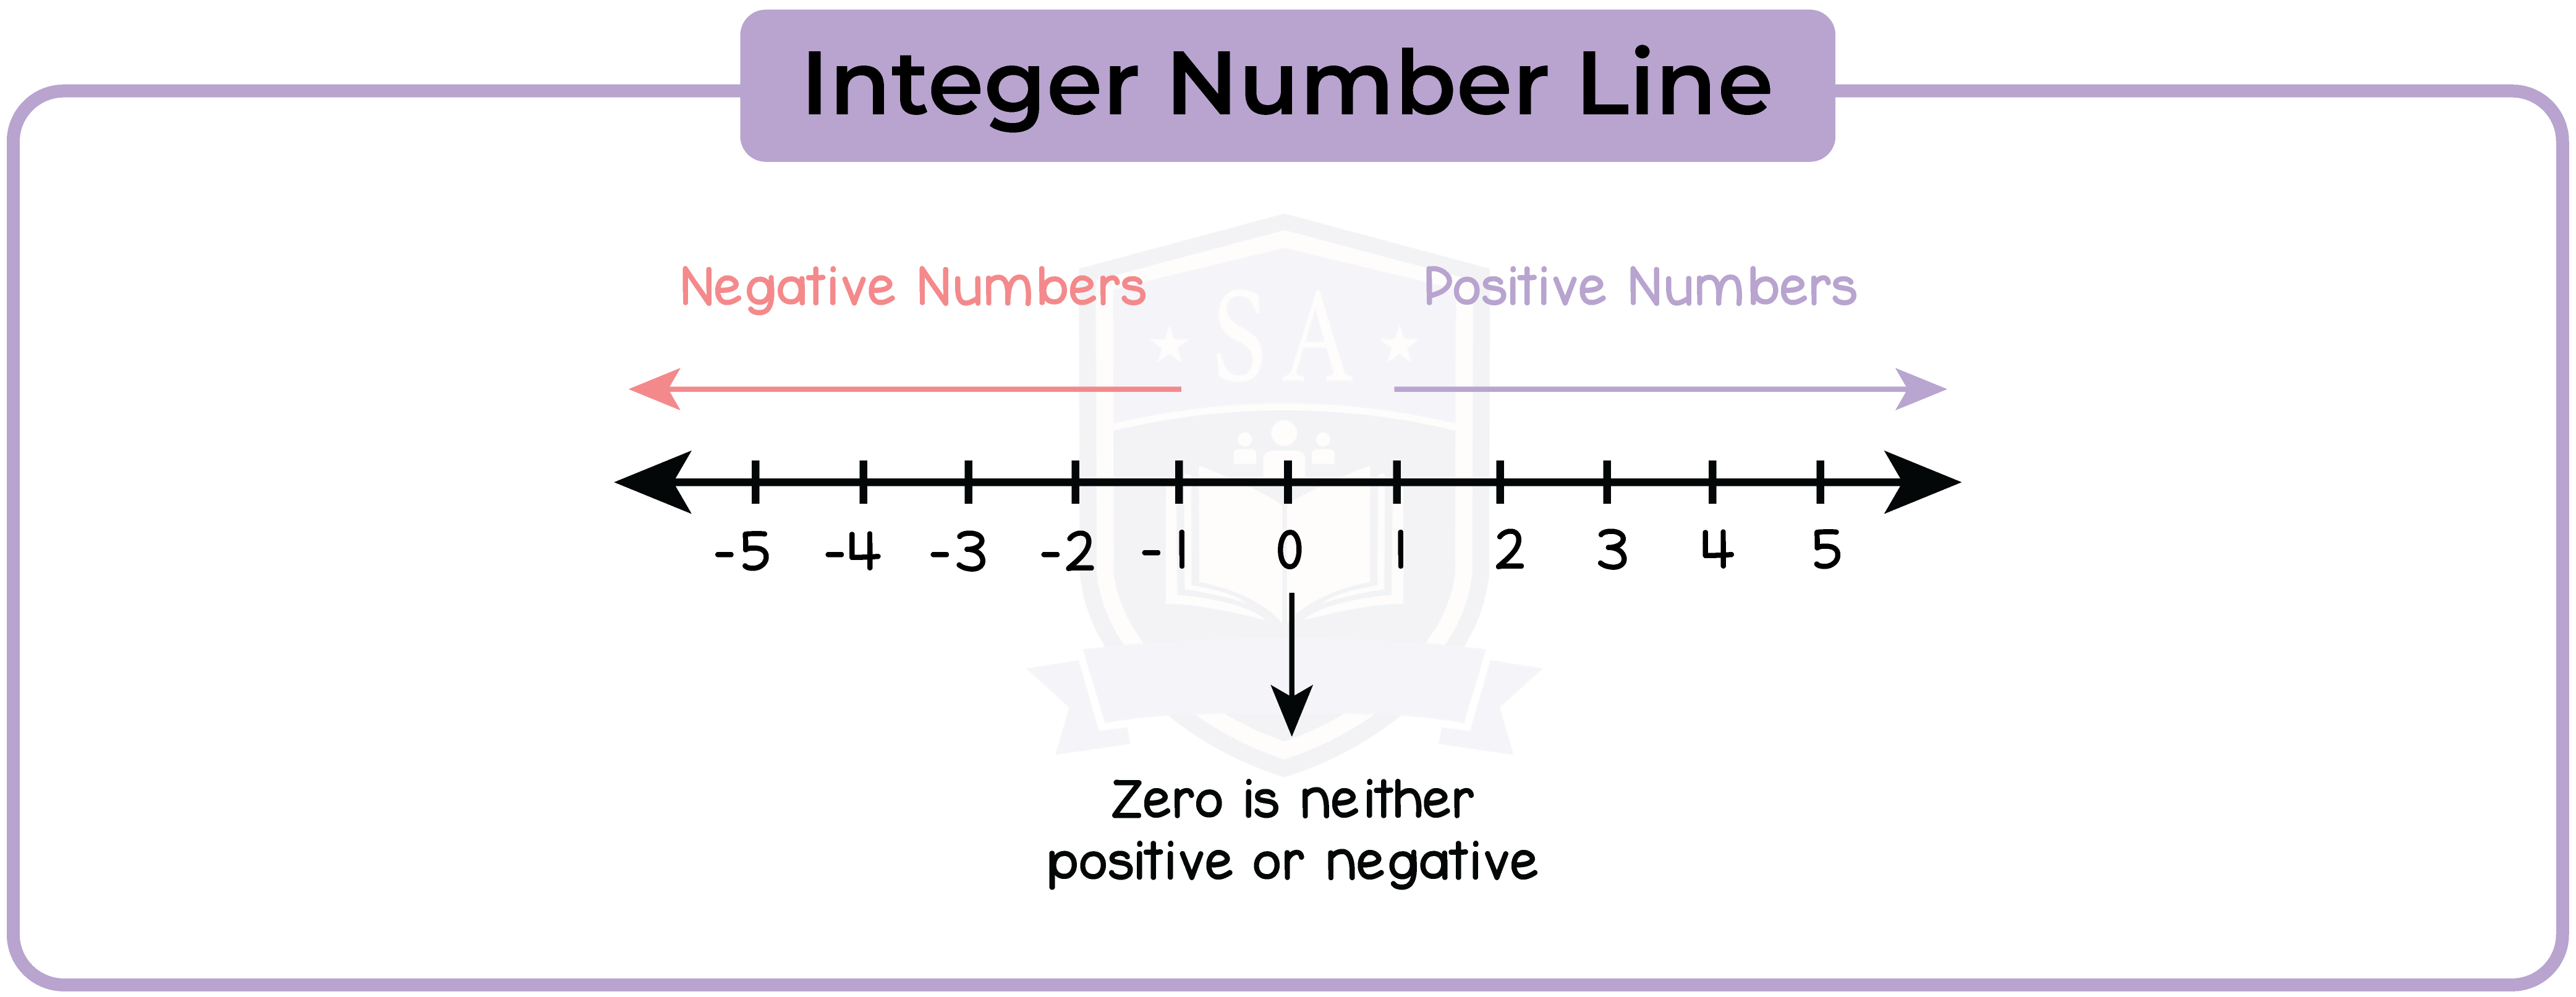 edexcel_igcse_mathemathics a_topic 01_integers_001_number line